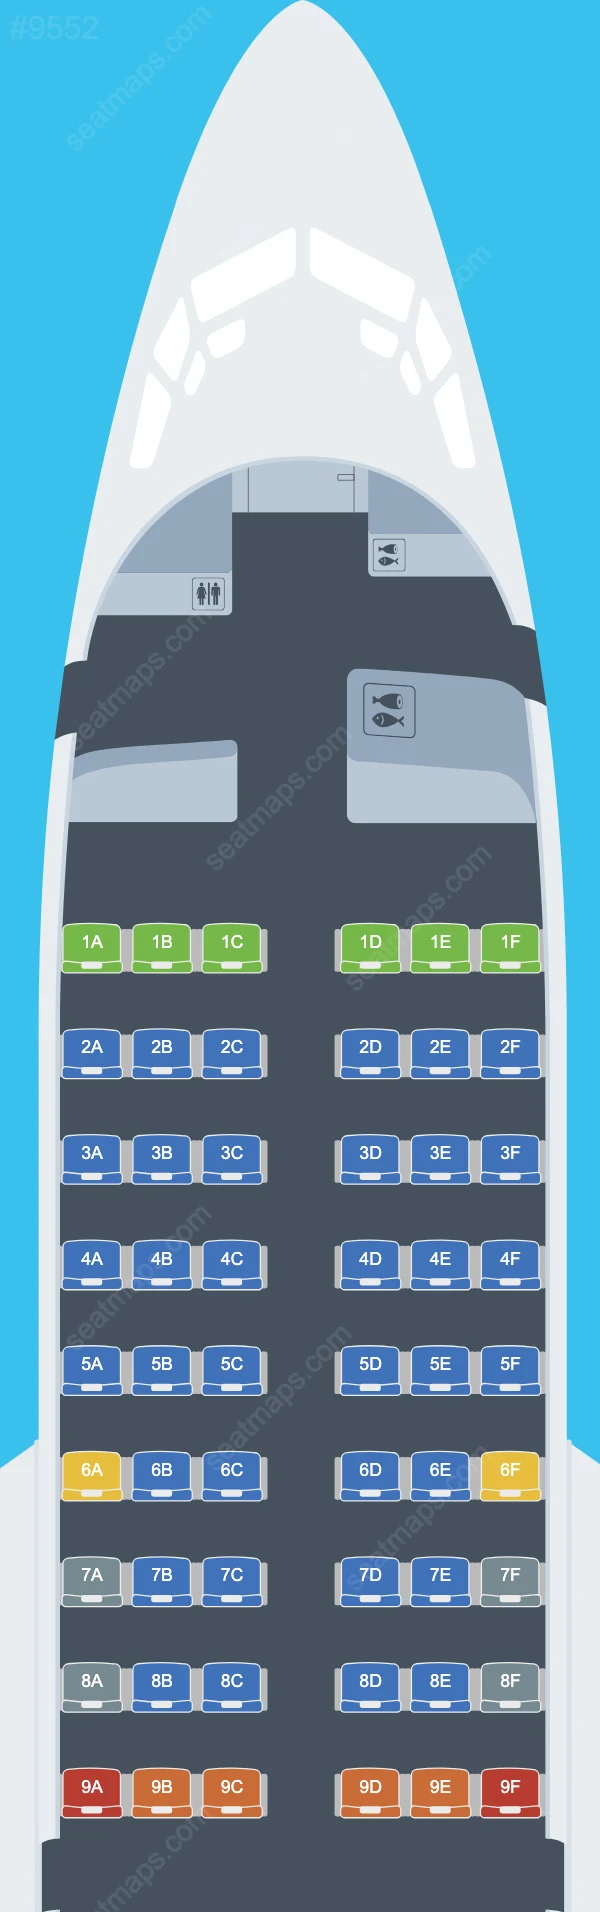 Albatros Airlines Boeing 737 Seat Maps 737-500